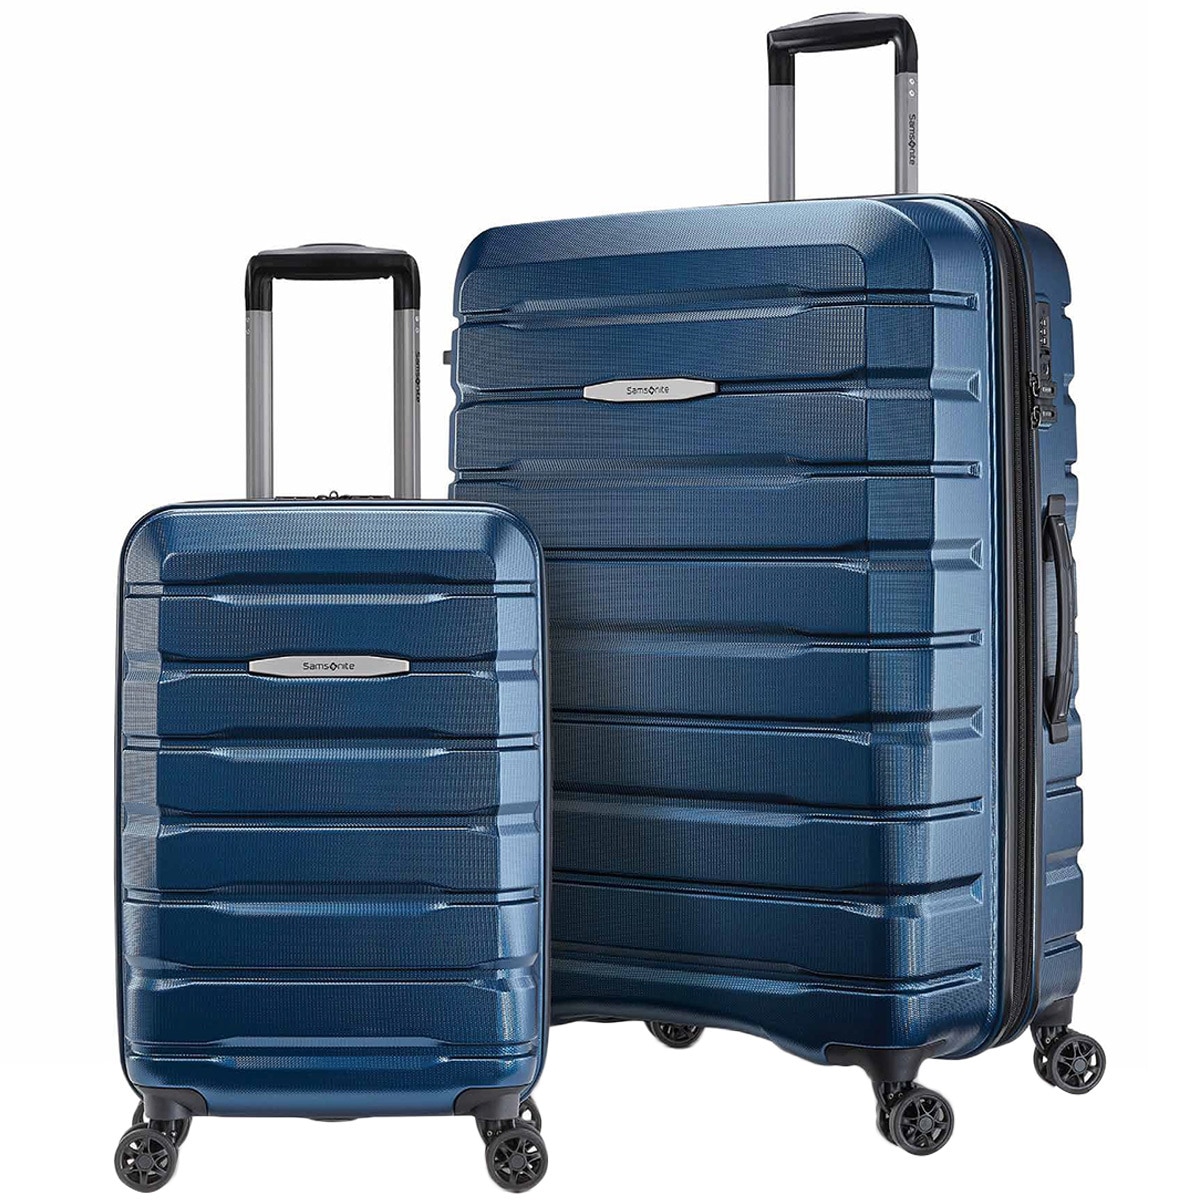 Samsonite Tech 2 Hardside Luggage - Blue